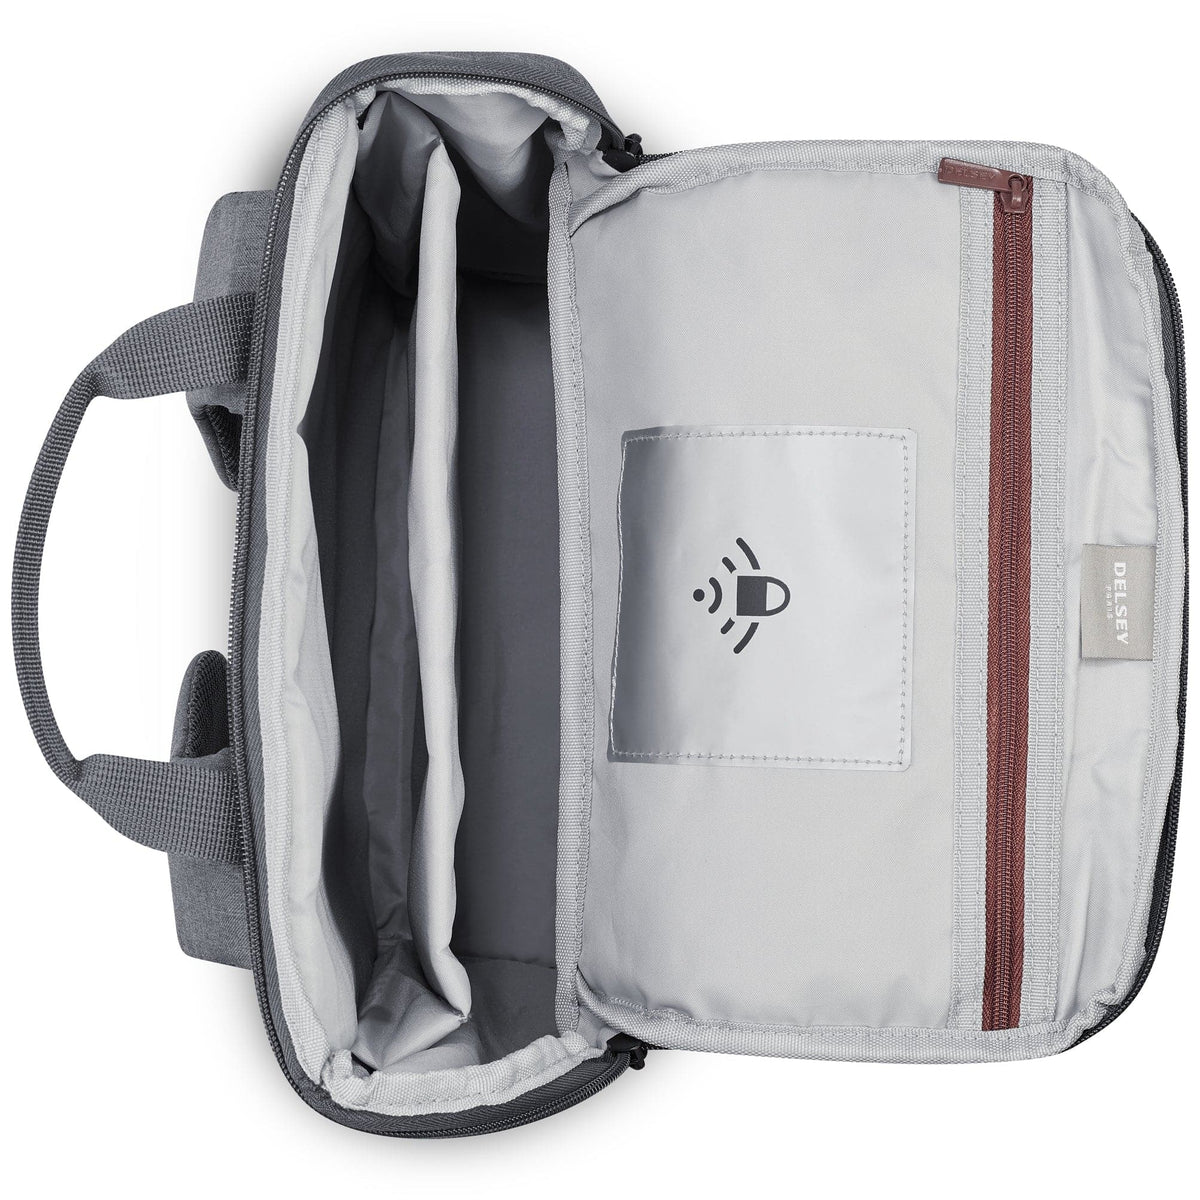 Delsey Maubert 2.0 Laptop Backpack